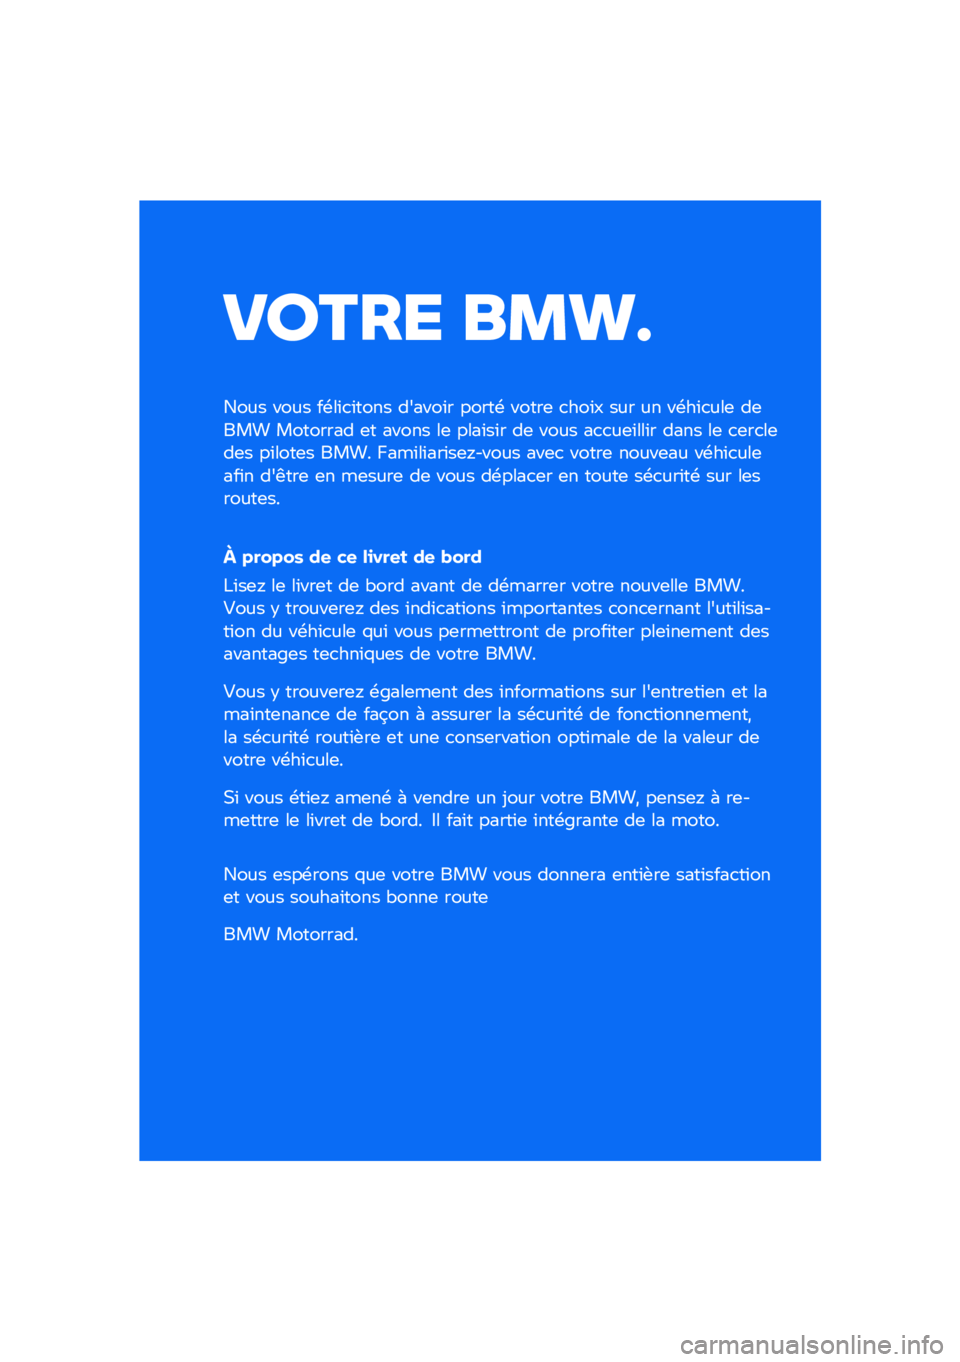 BMW MOTORRAD CE 04 2021  Livret de bord (in French) ����� ��\b�	�

���� ���� ��\b��\f�
�\f���� ������\f� �����\b �����	 �
���\f� ��� �� ��\b��\f�
���	 ��	��� �������� �	� ����� ��	 ���